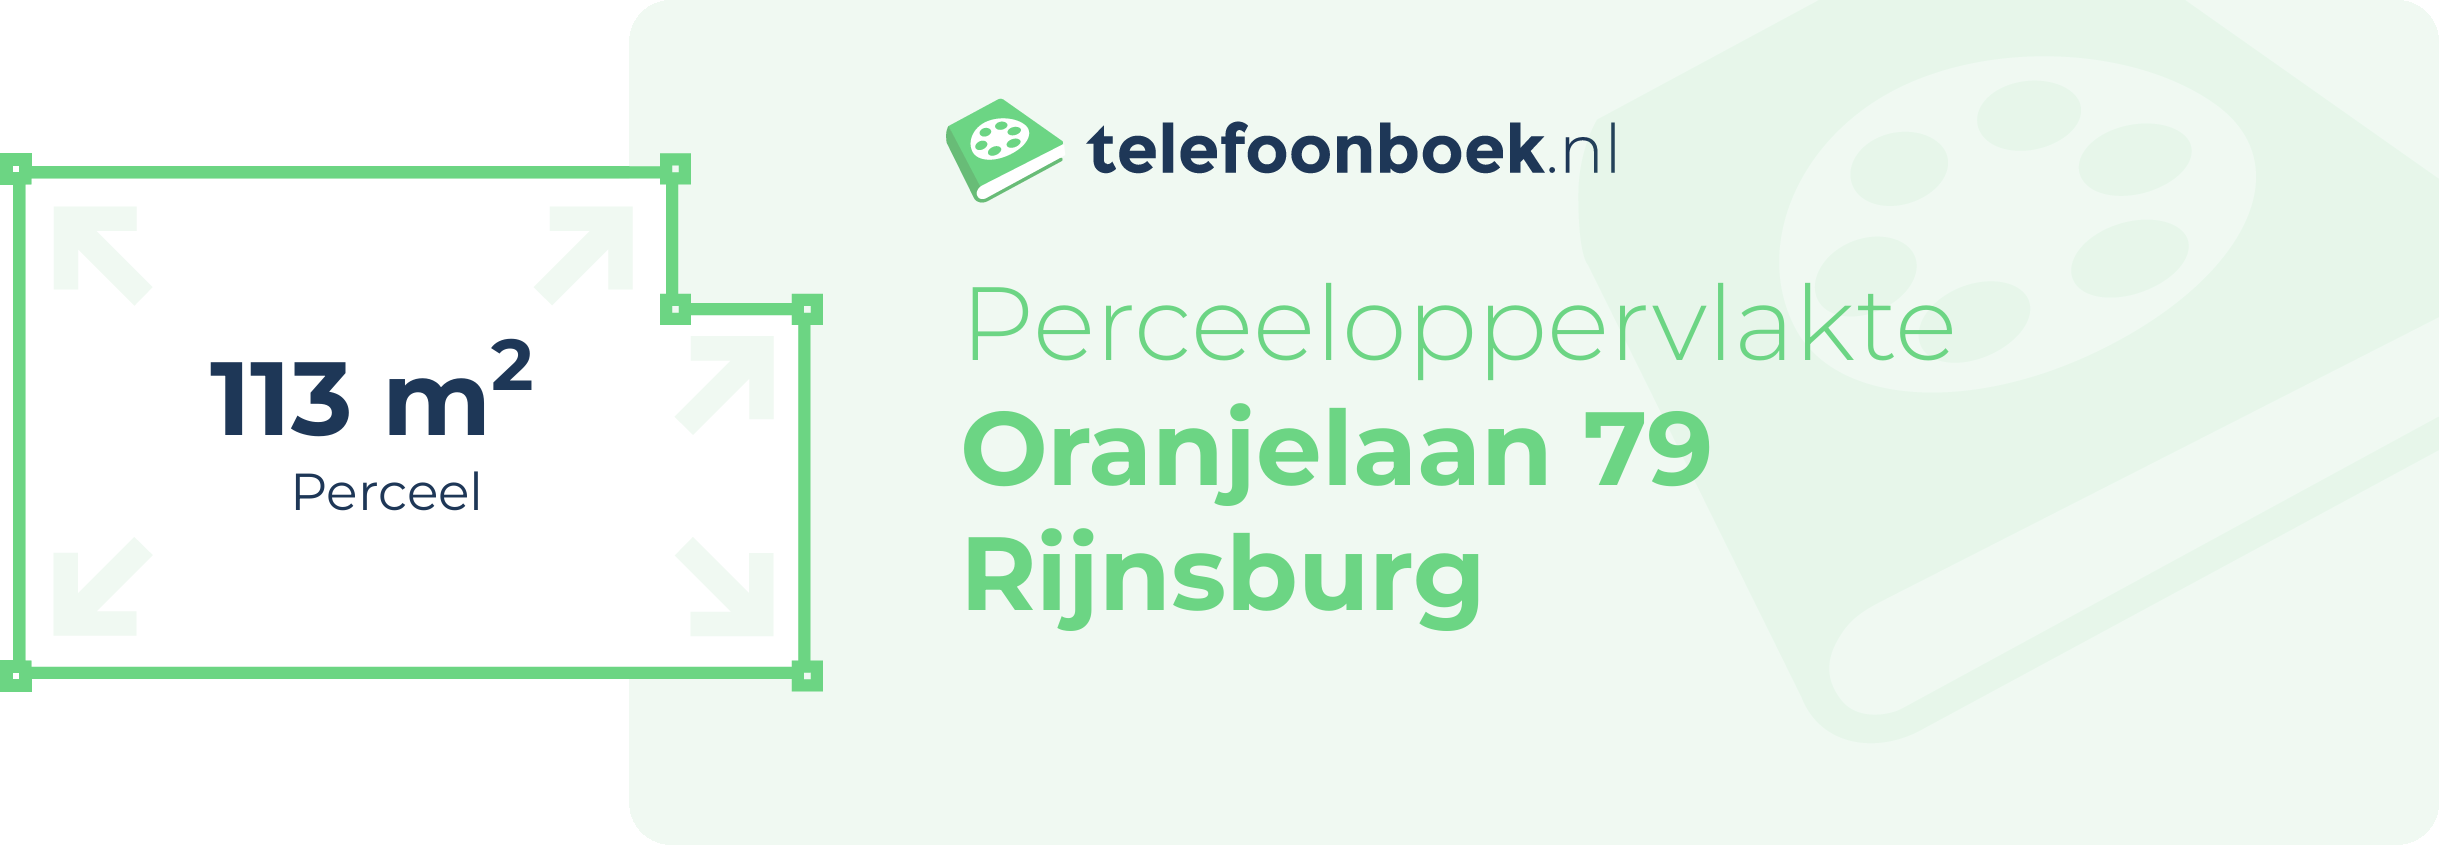 Perceeloppervlakte Oranjelaan 79 Rijnsburg